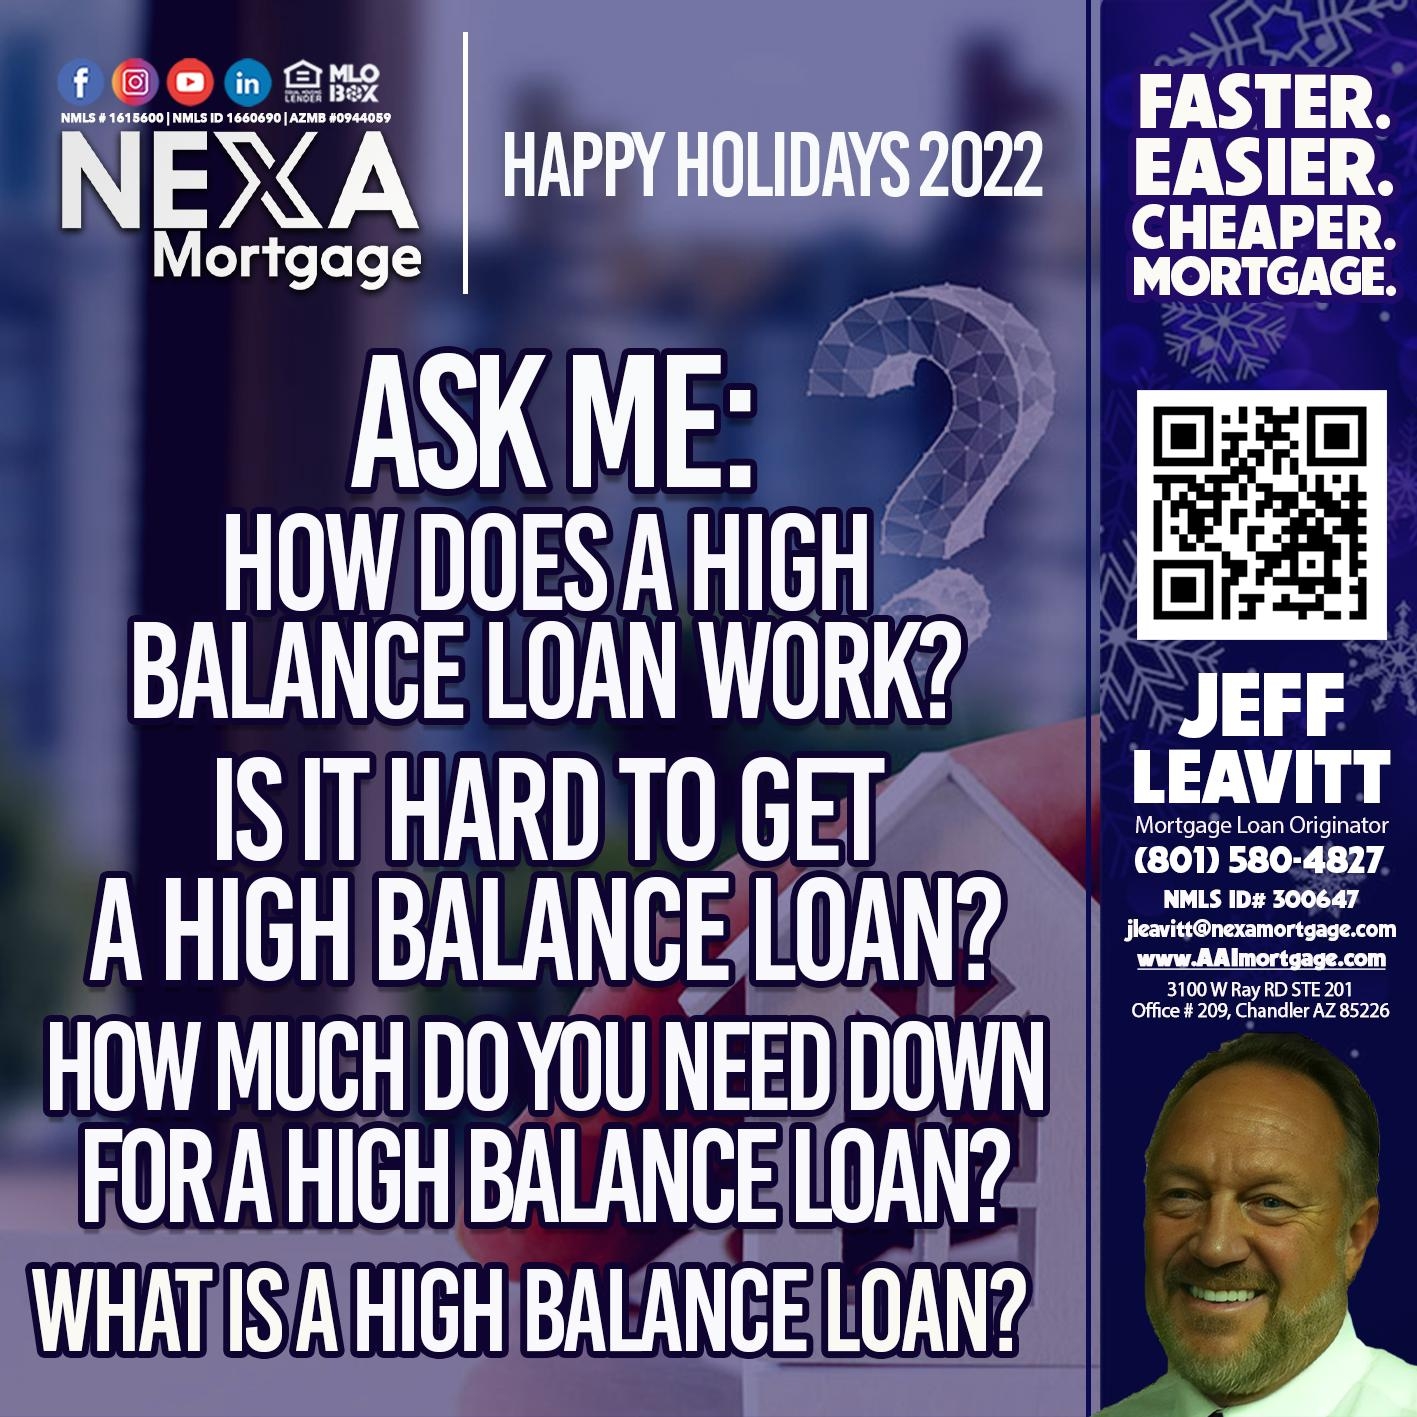 VA LOANS - Jeffery Leavitt -Mortgage Loan Originator